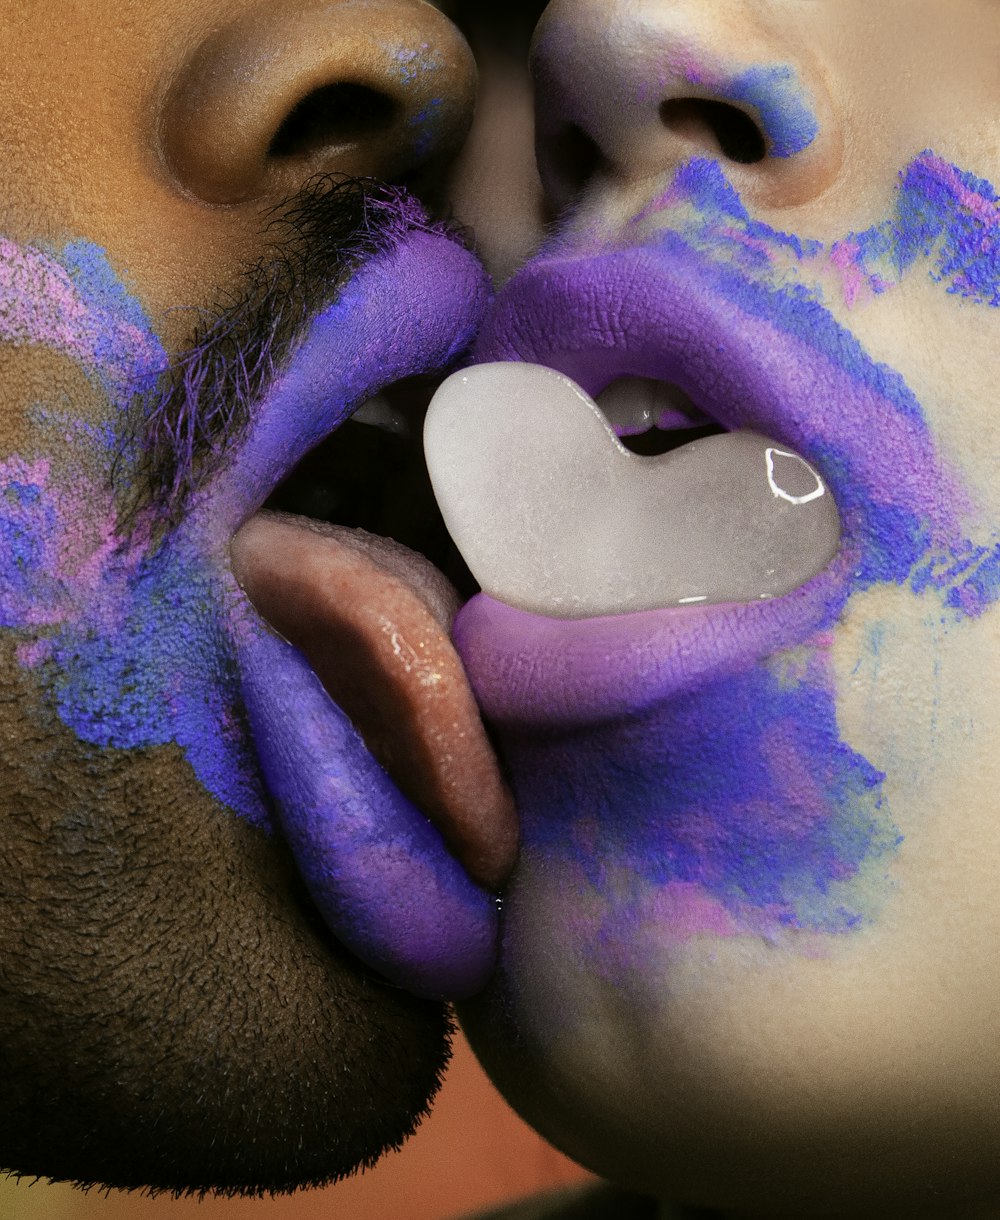 man licking woman's lip